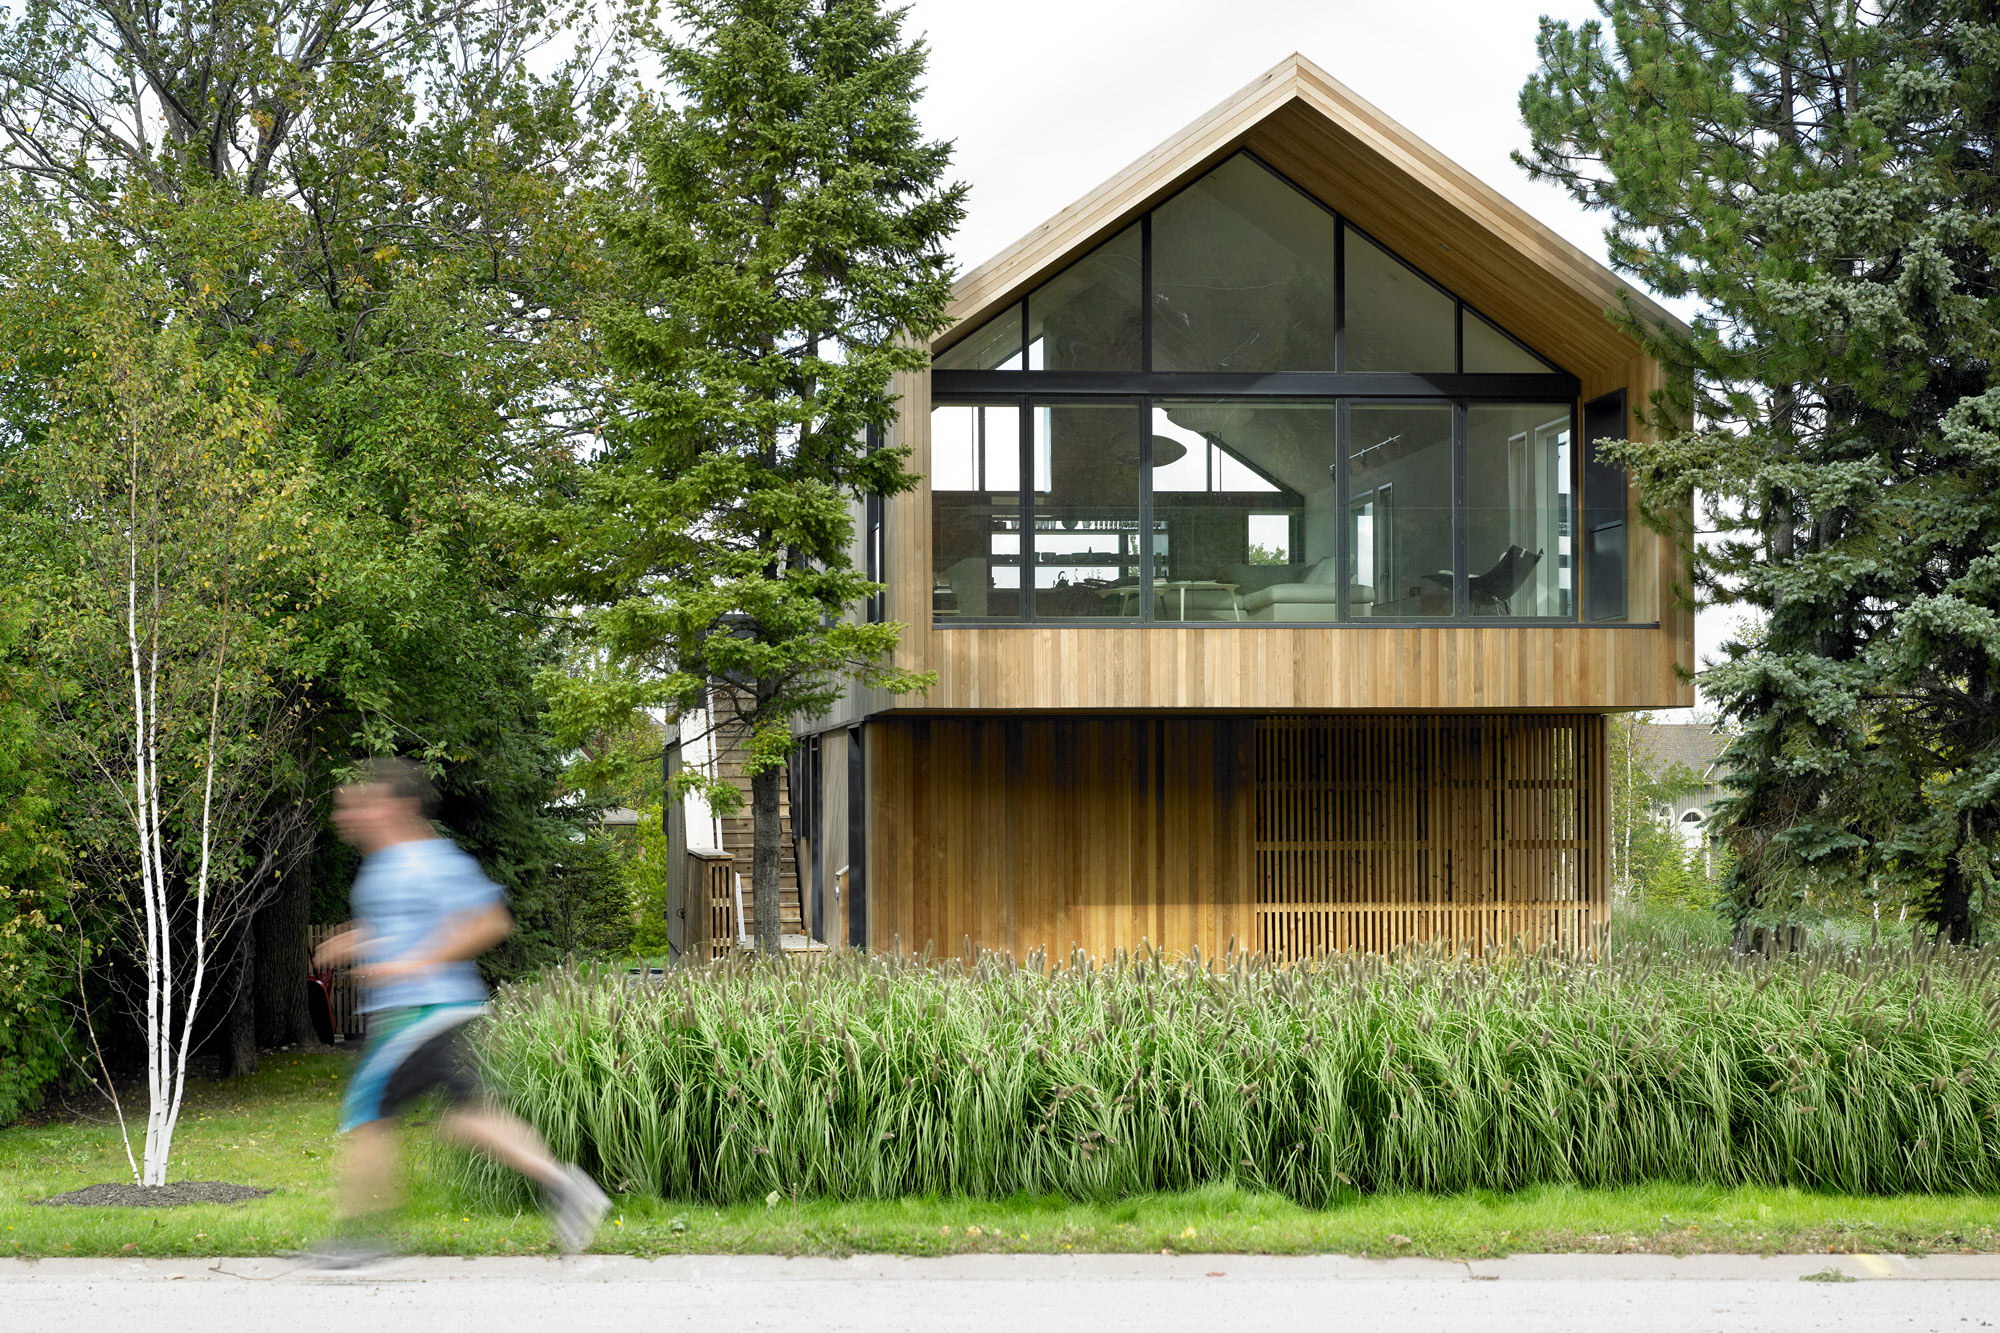 Maison Glissade – Ski Chalet by Akb Architects